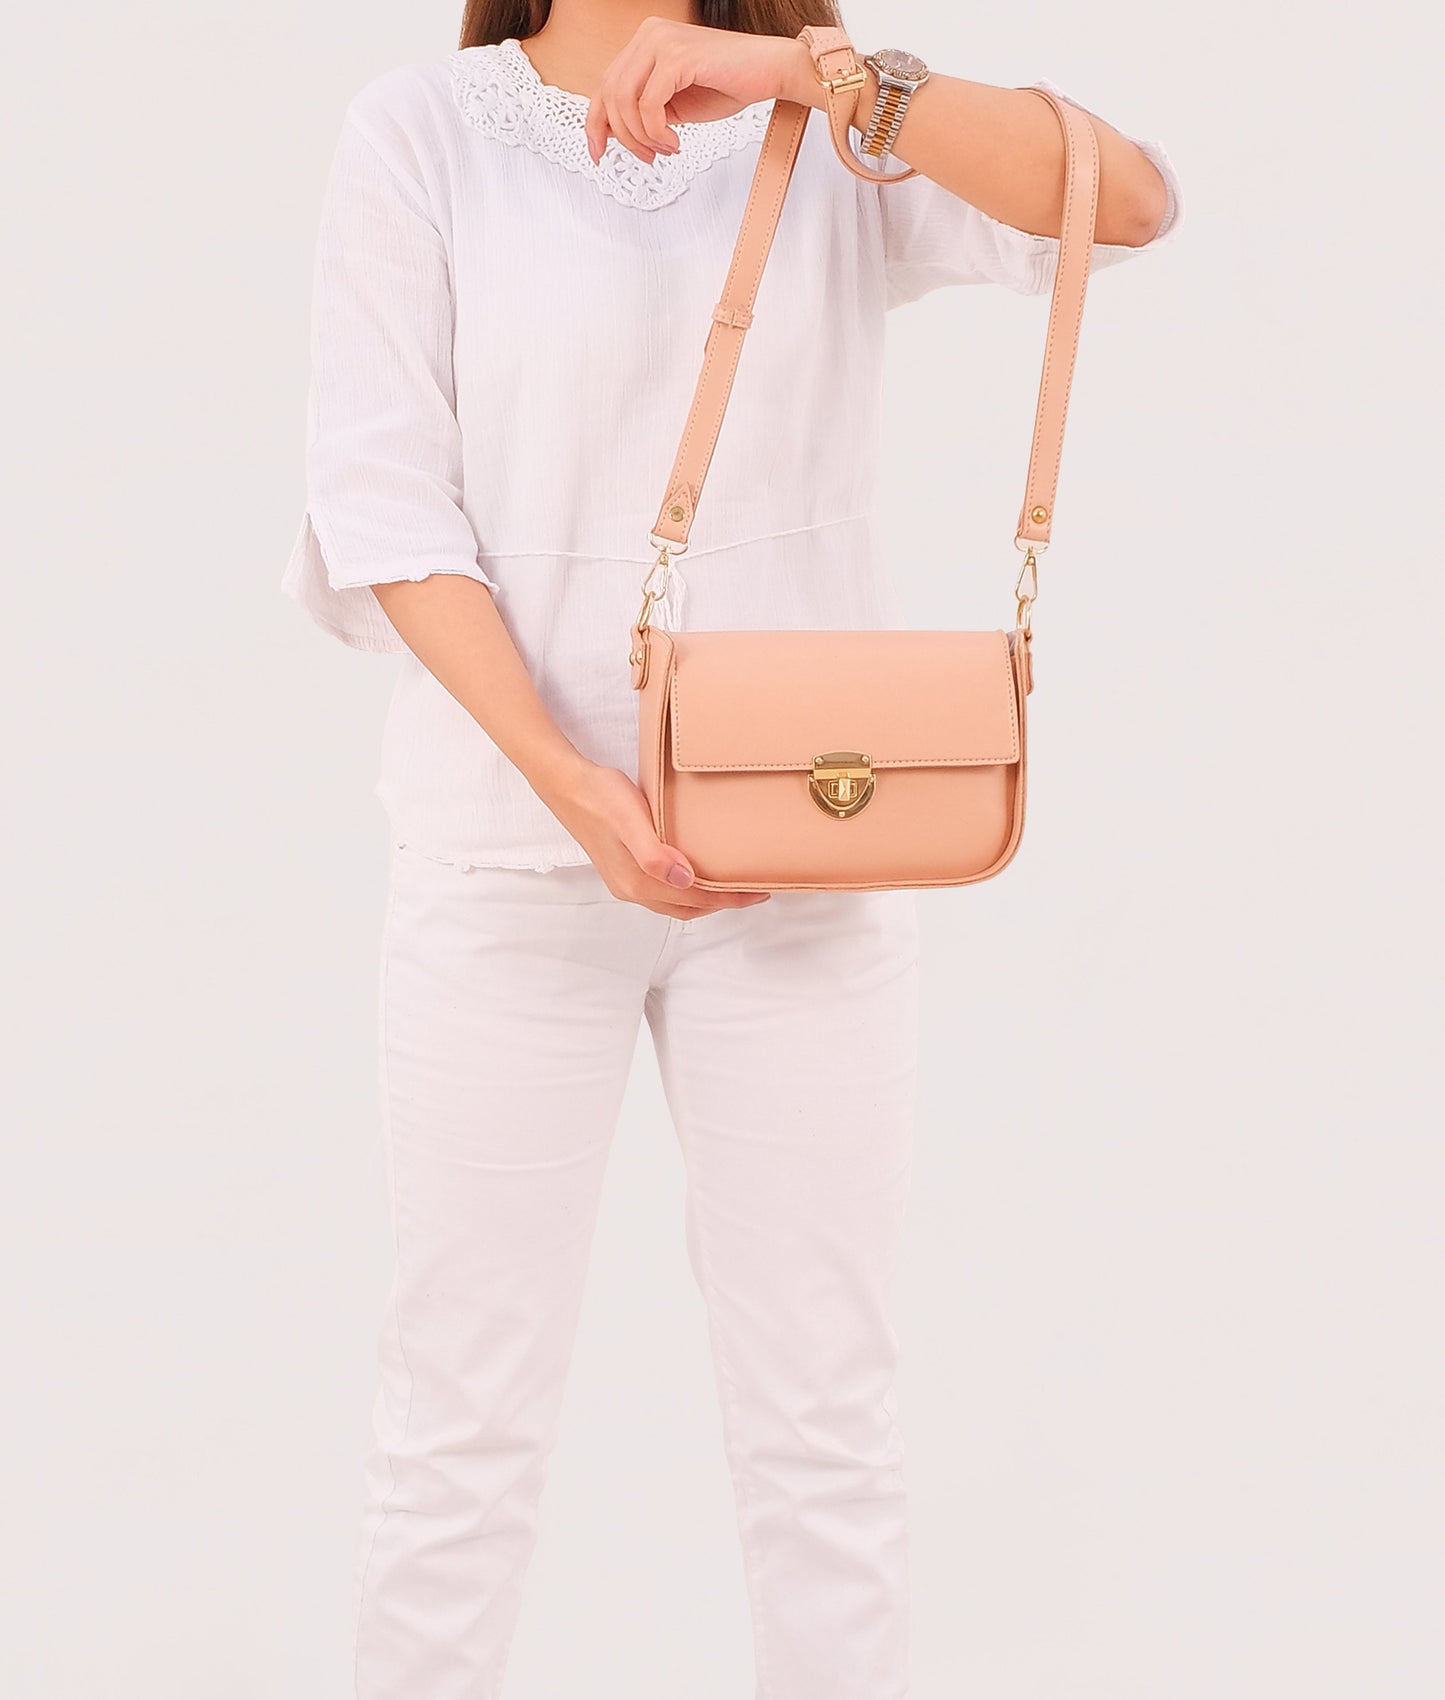 Pink Handbag For Women 606